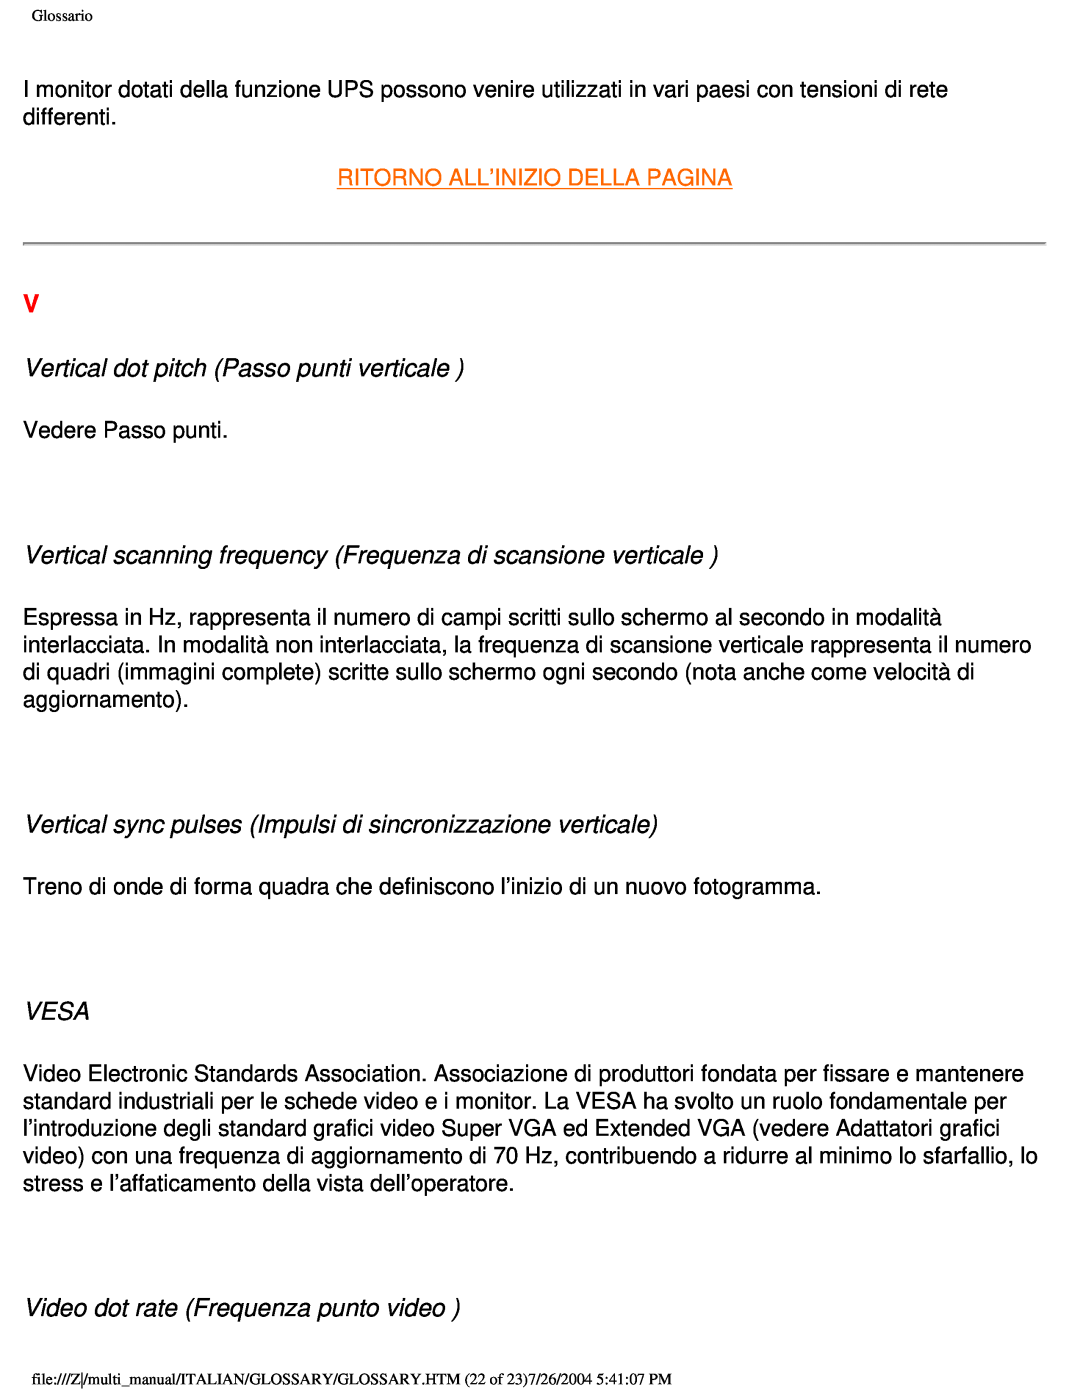 Philips 201B user manual Vertical dot pitch Passo punti verticale, Vesa, Video dot rate Frequenza punto video 